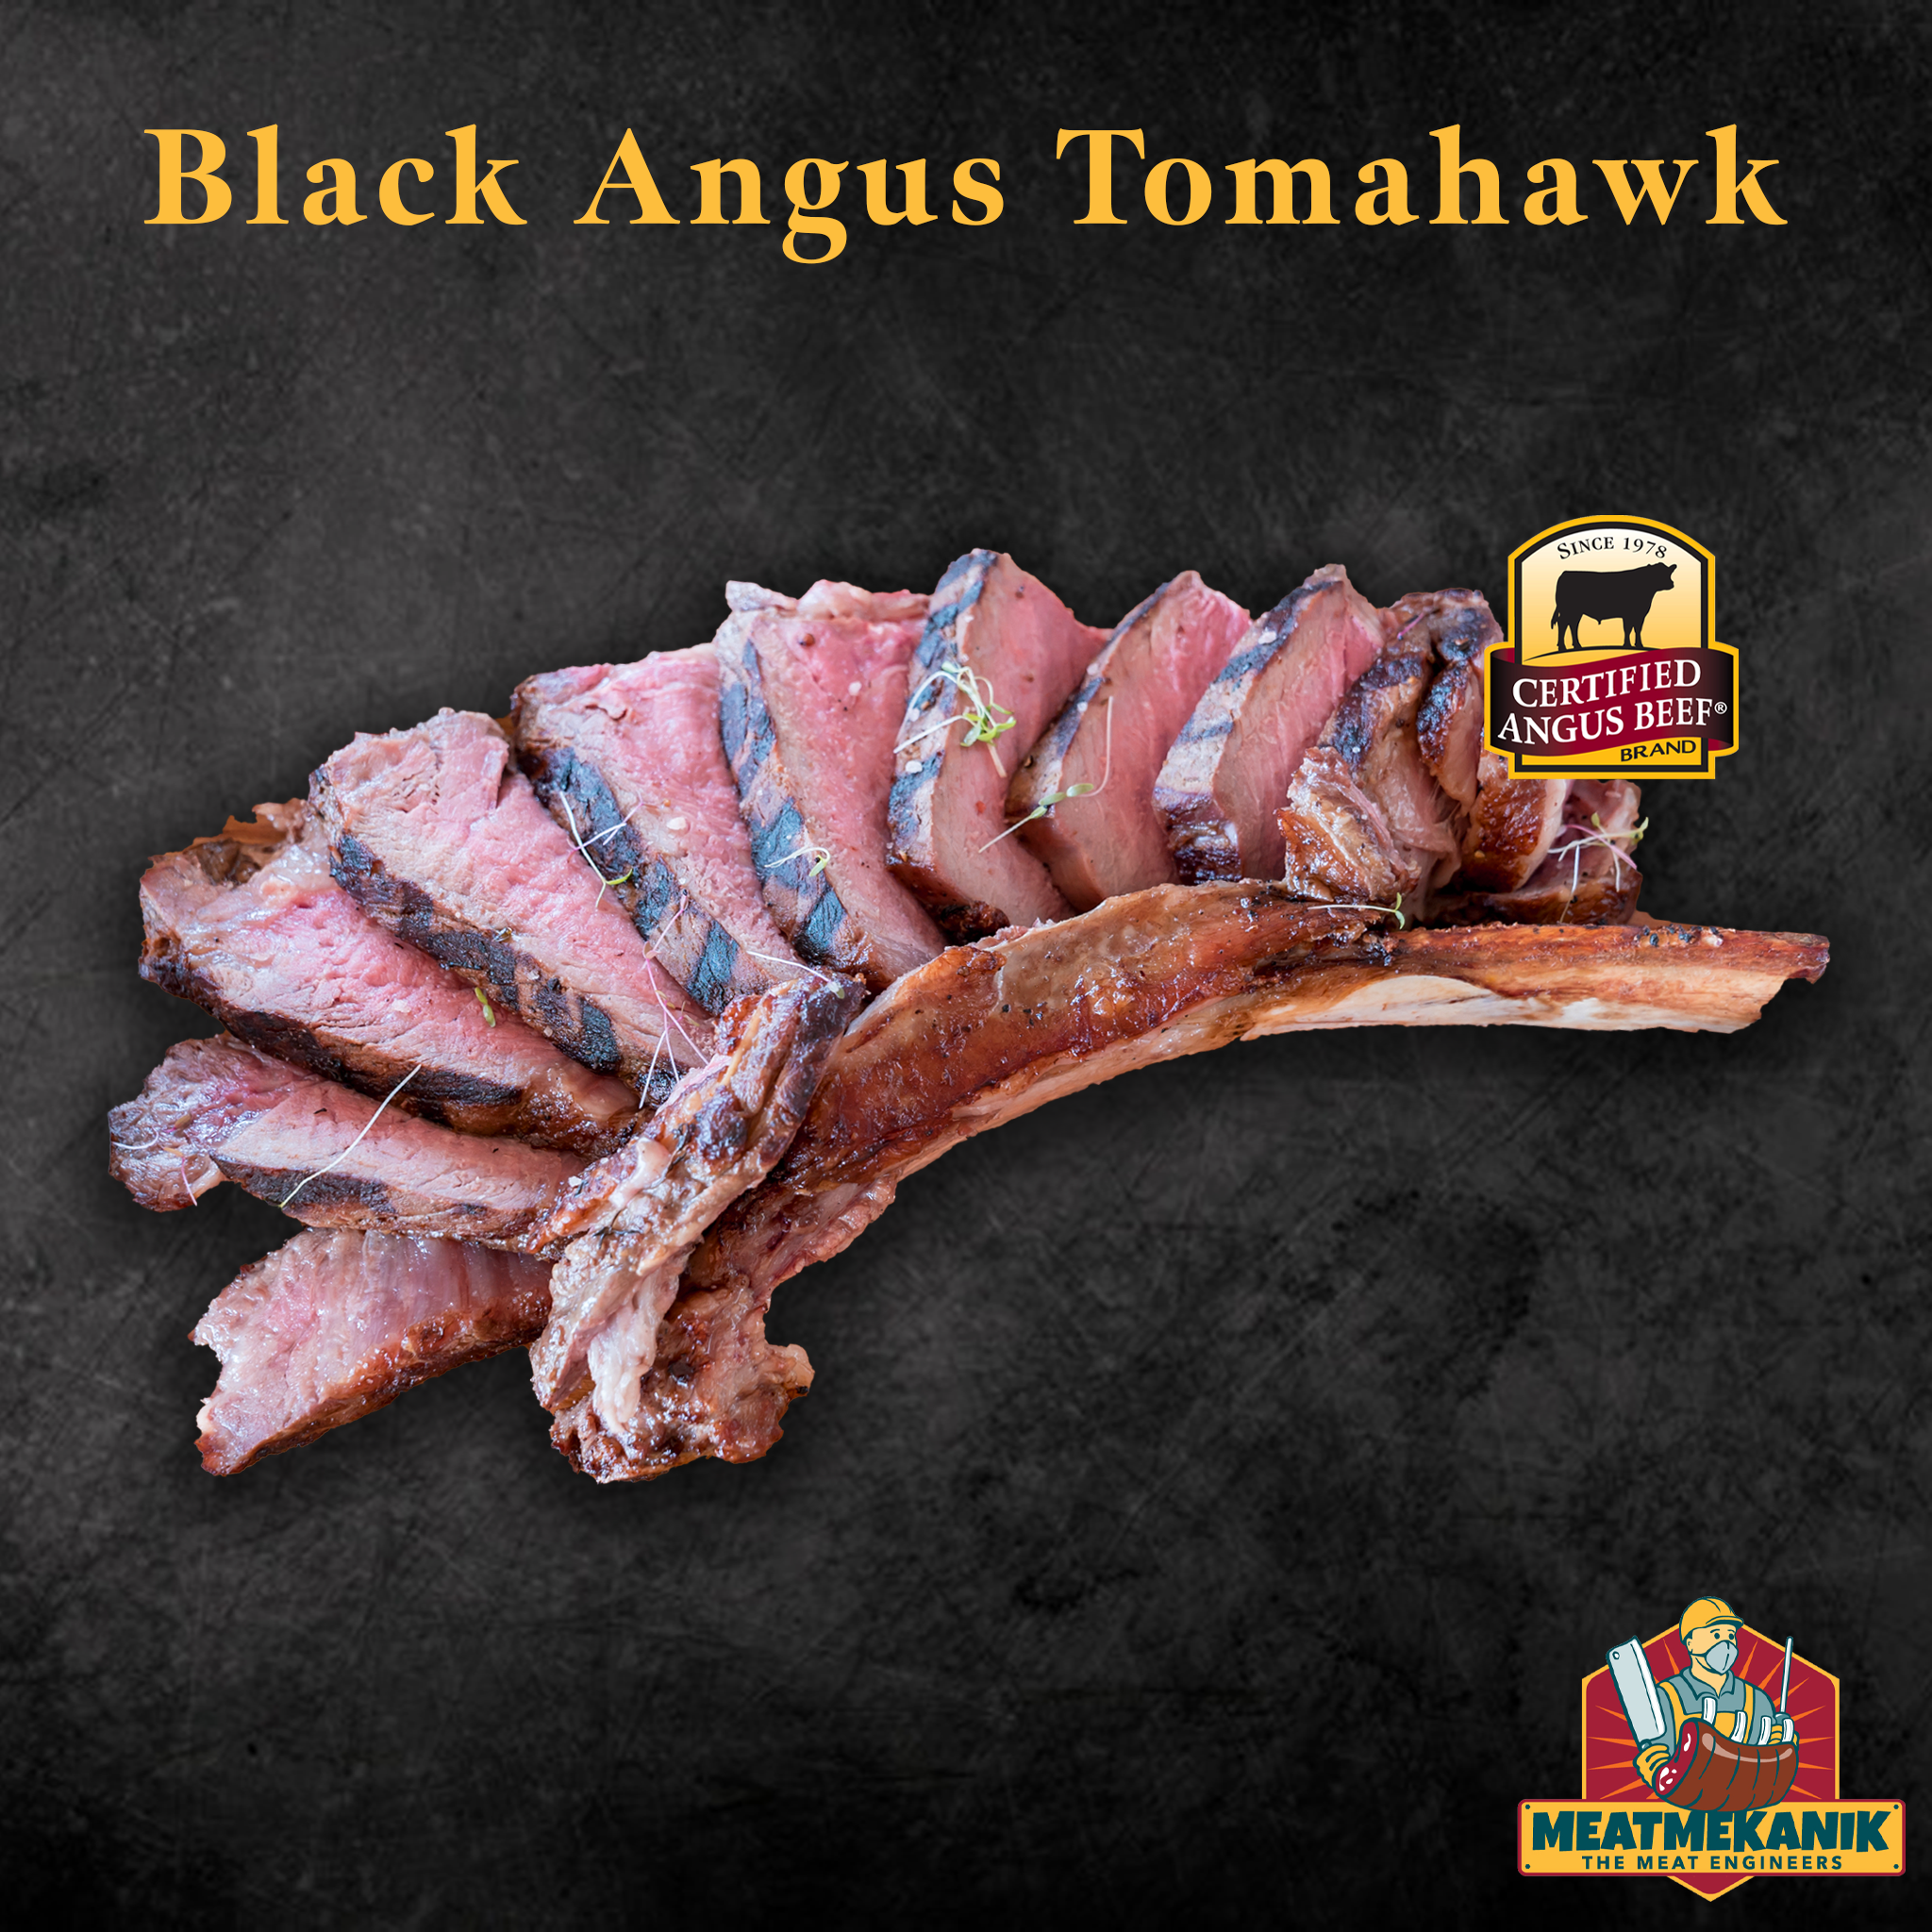 Black Angus Tomahawk - Meat Mekanik